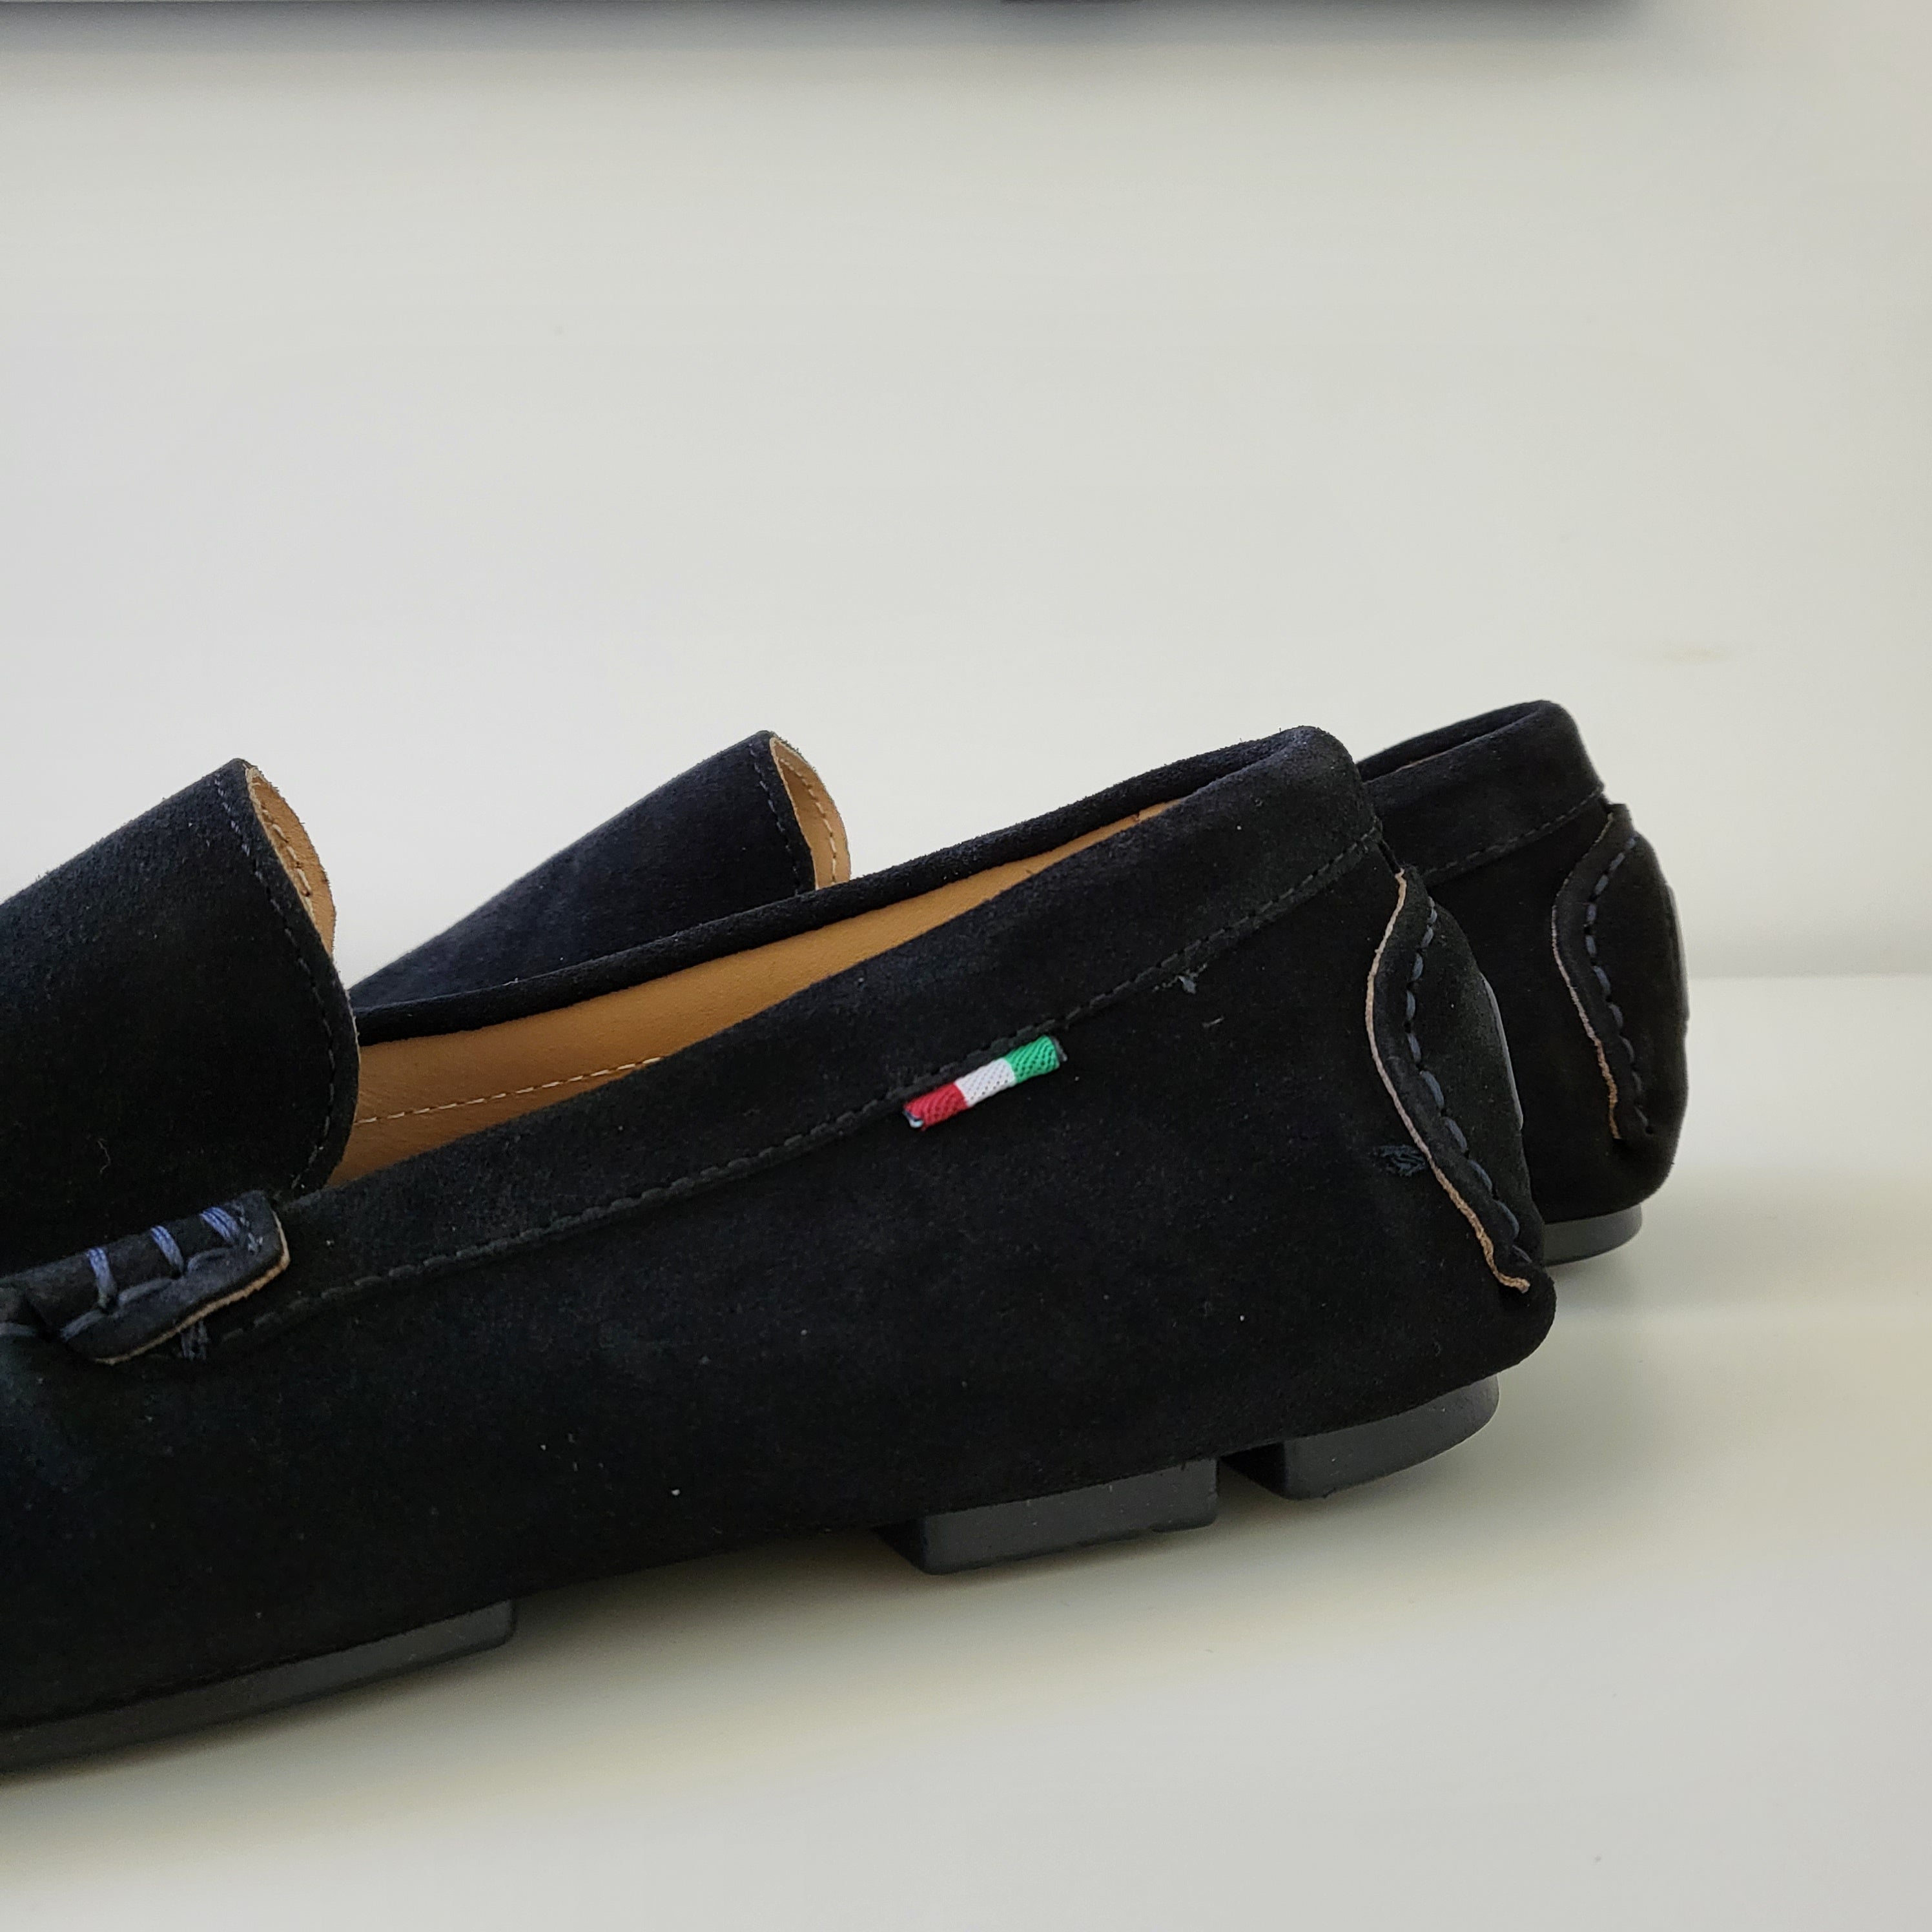 Carro Positano 200 Mens Premium Italian handmade suede loafers